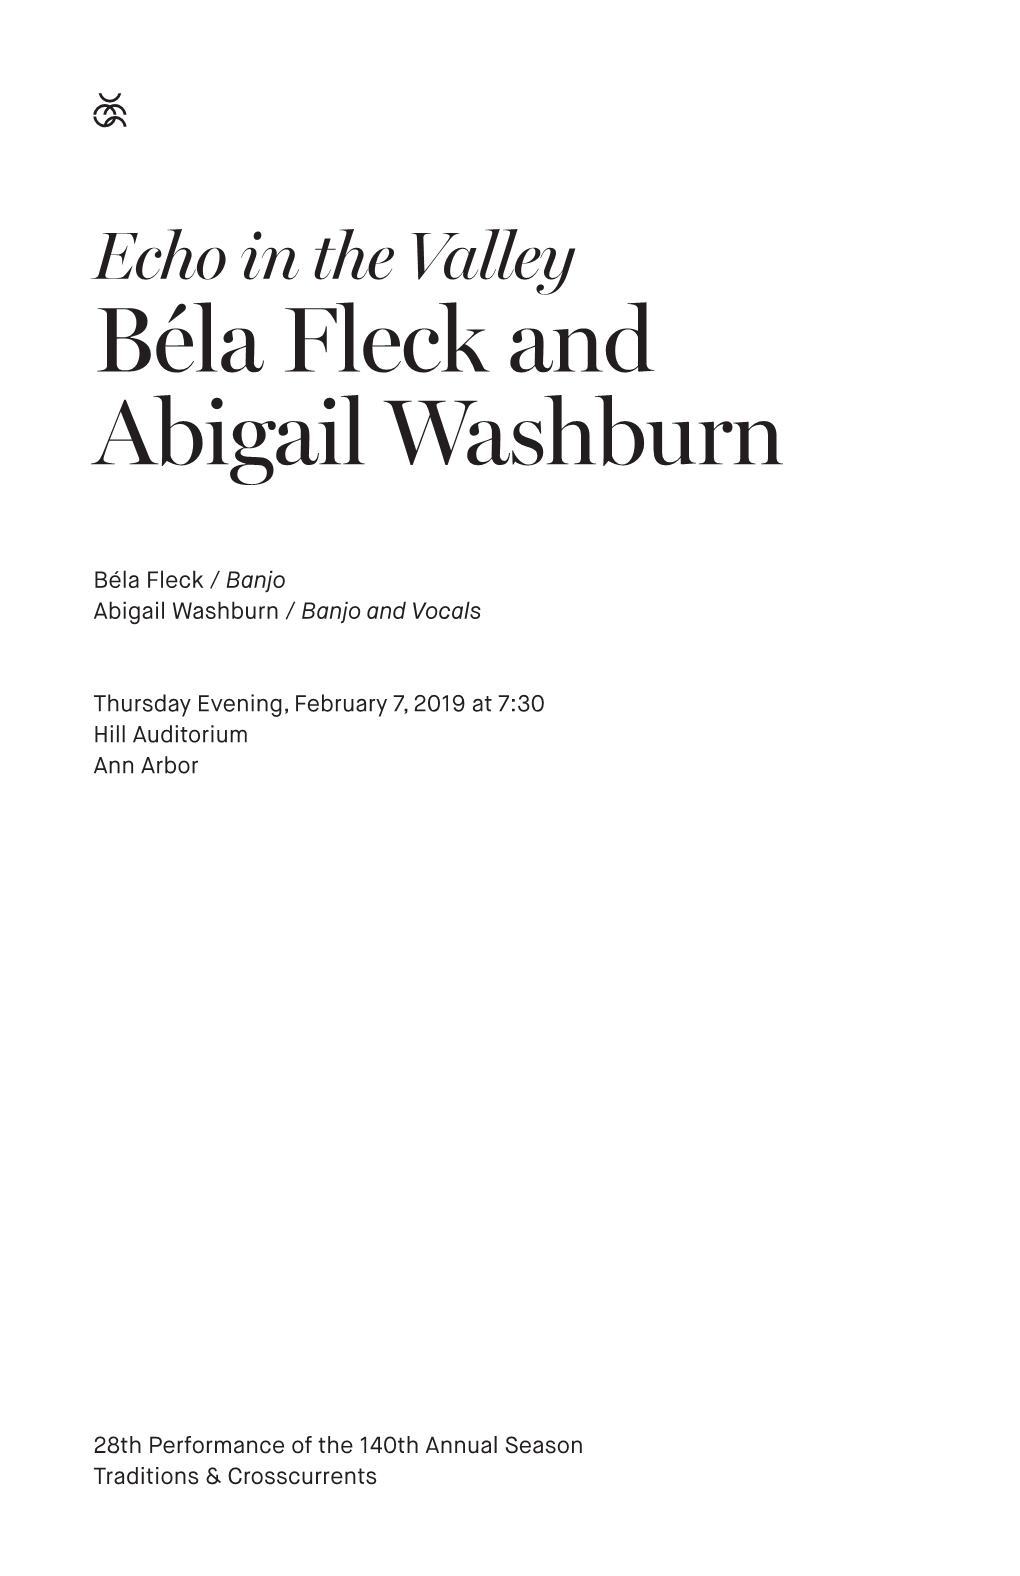 Béla Fleck and Abigail Washburn